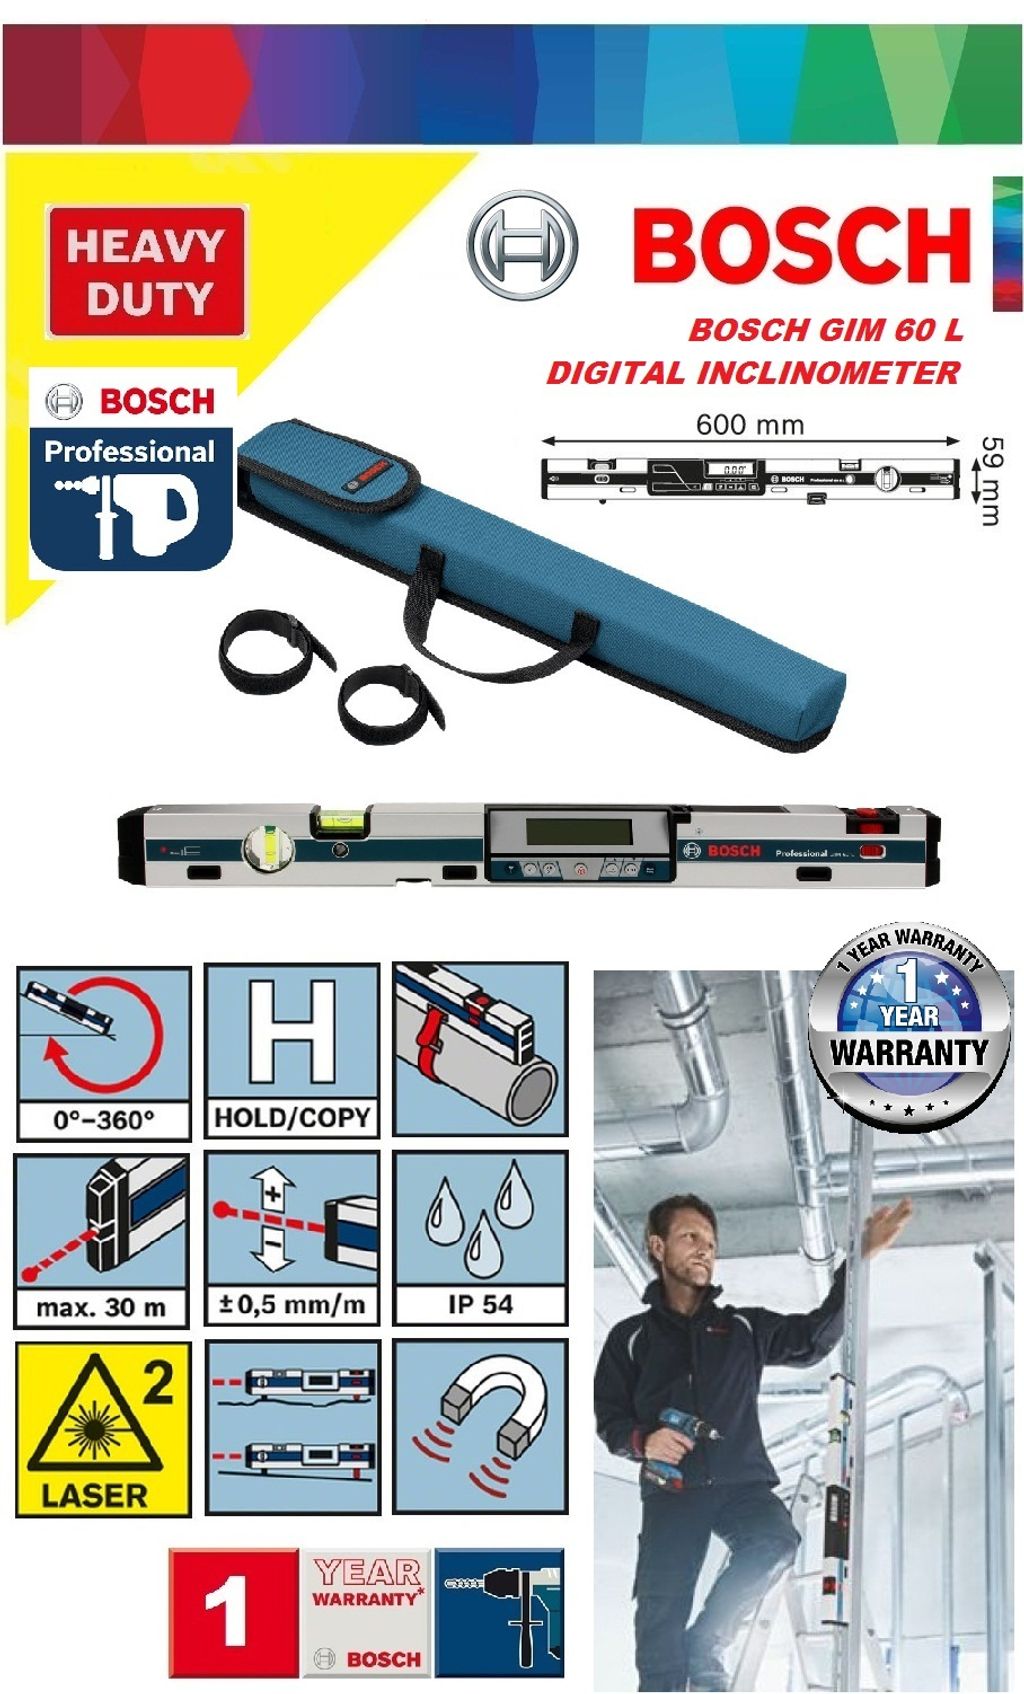 Bosch GIM 60 L Digital Inclinometer – MY Power Tools